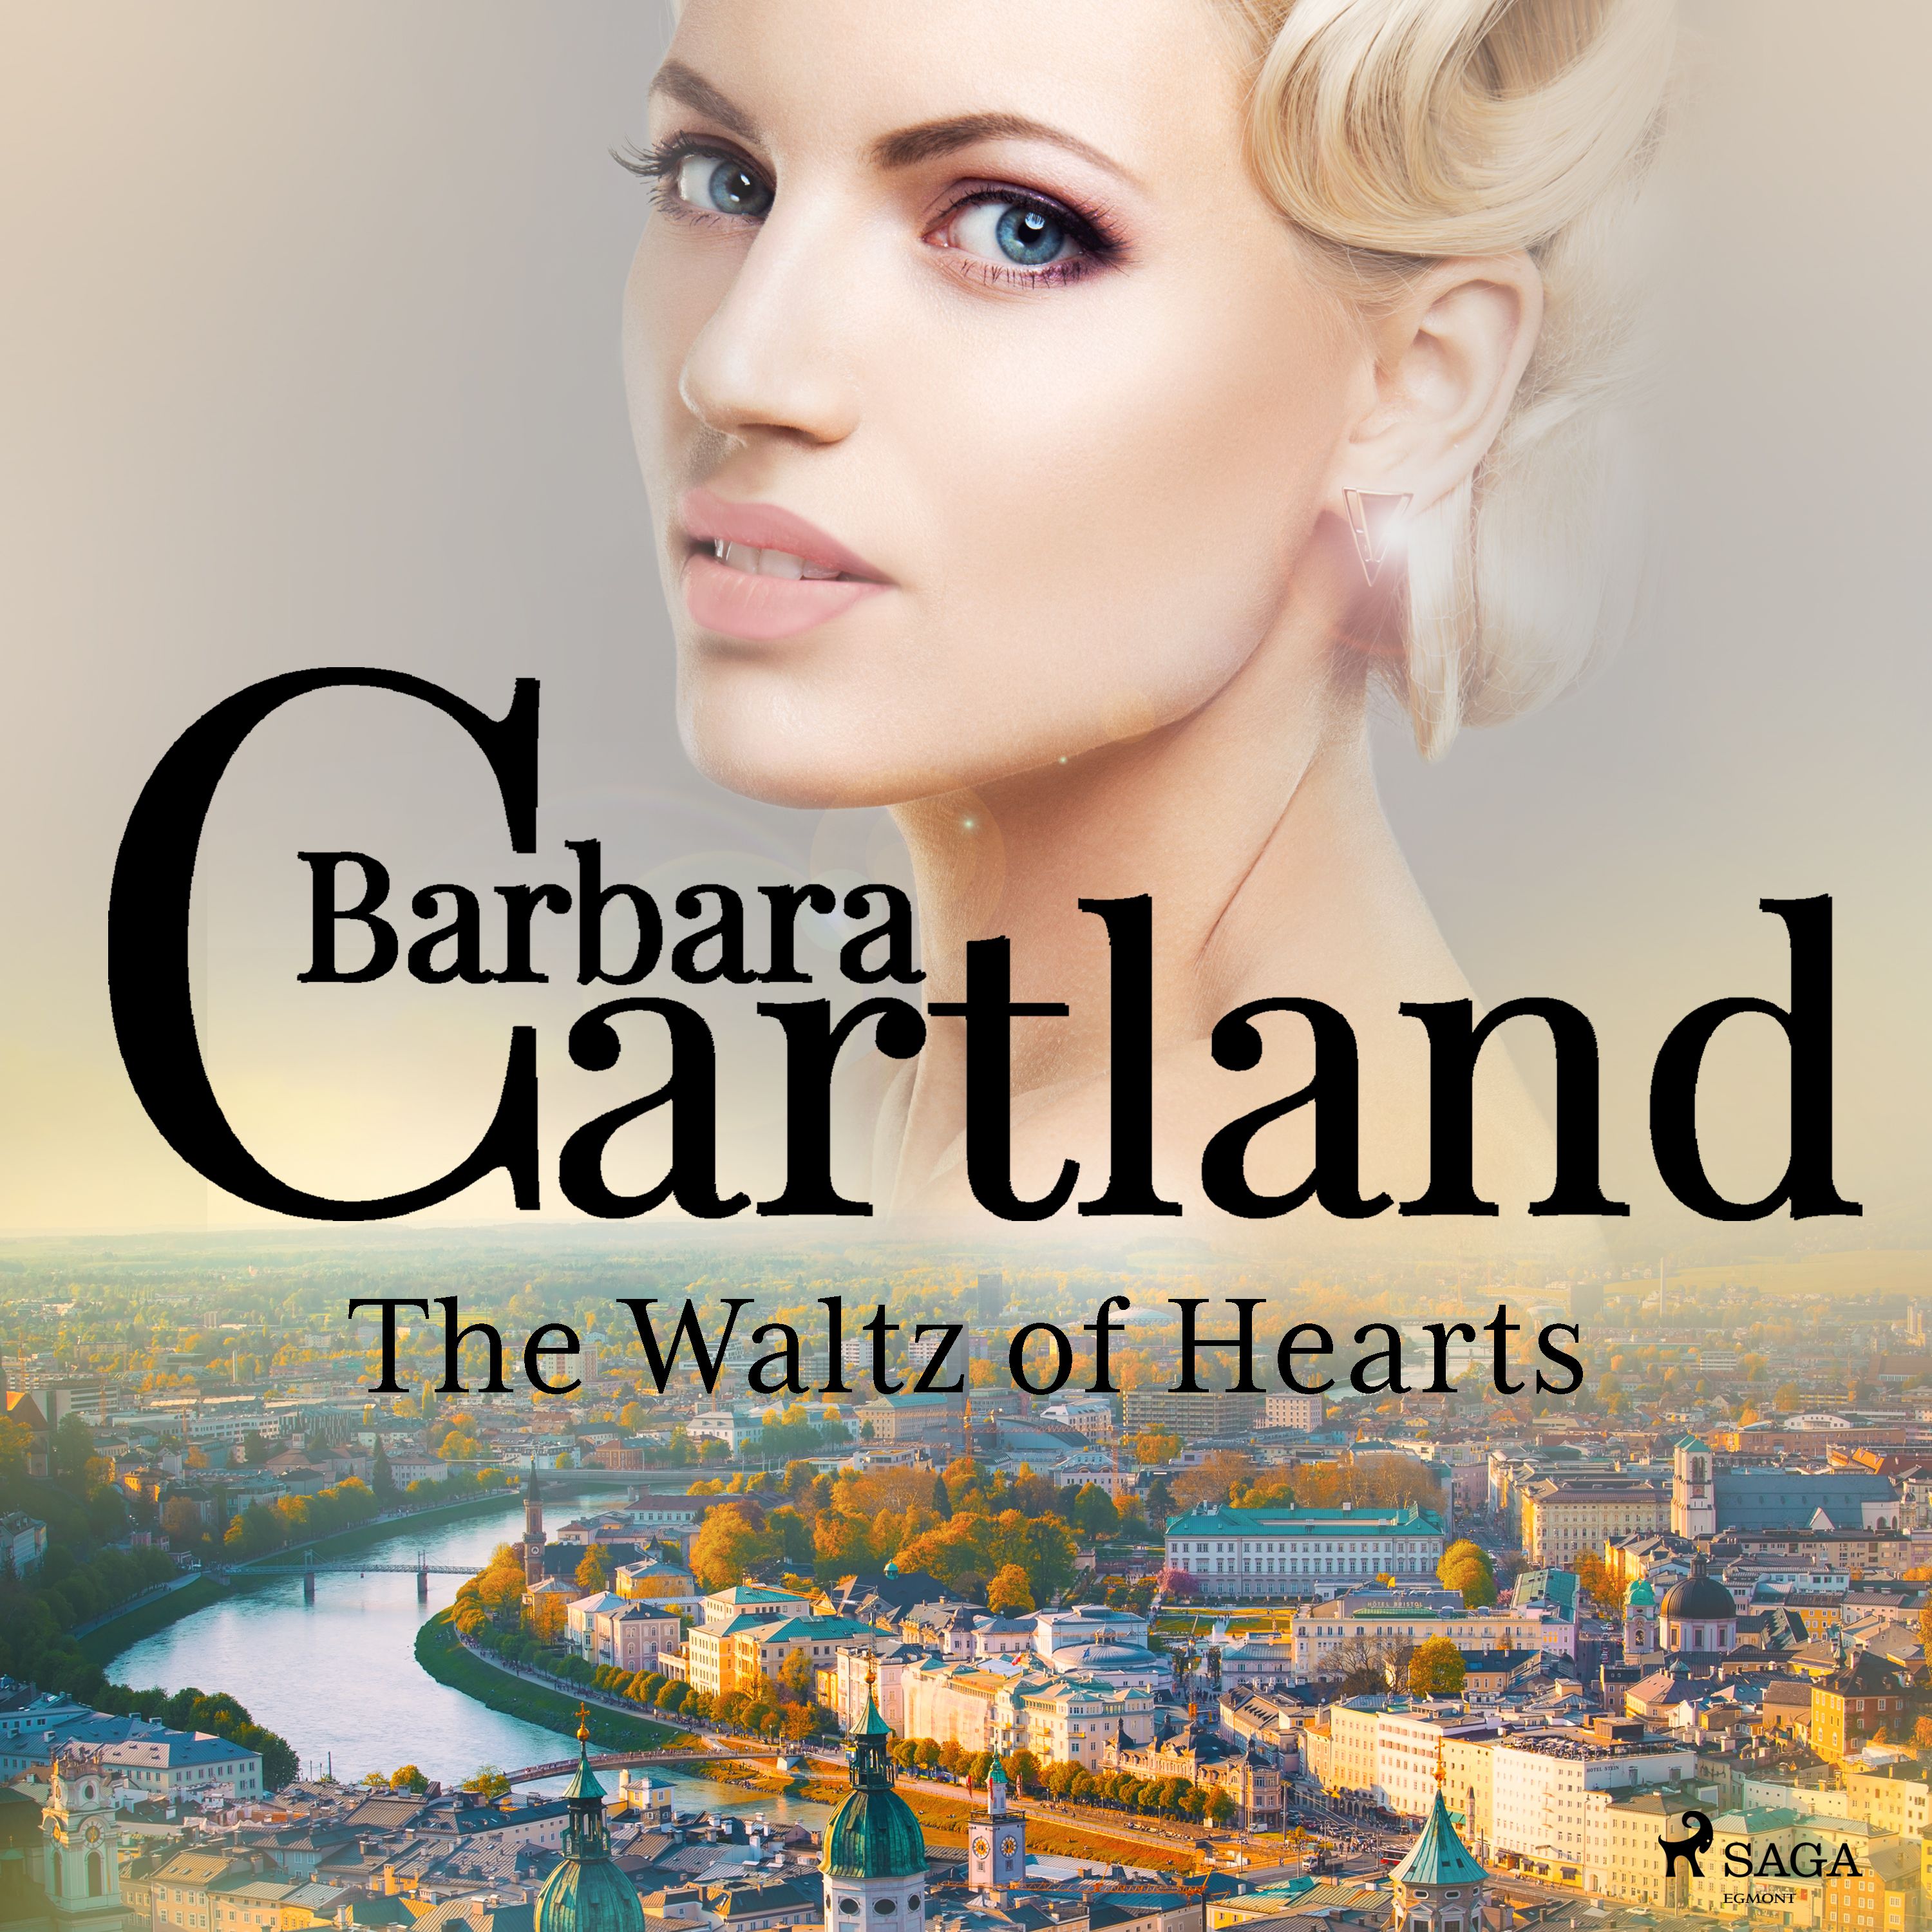 The Waltz of Hearts, lydbog af Barbara Cartland